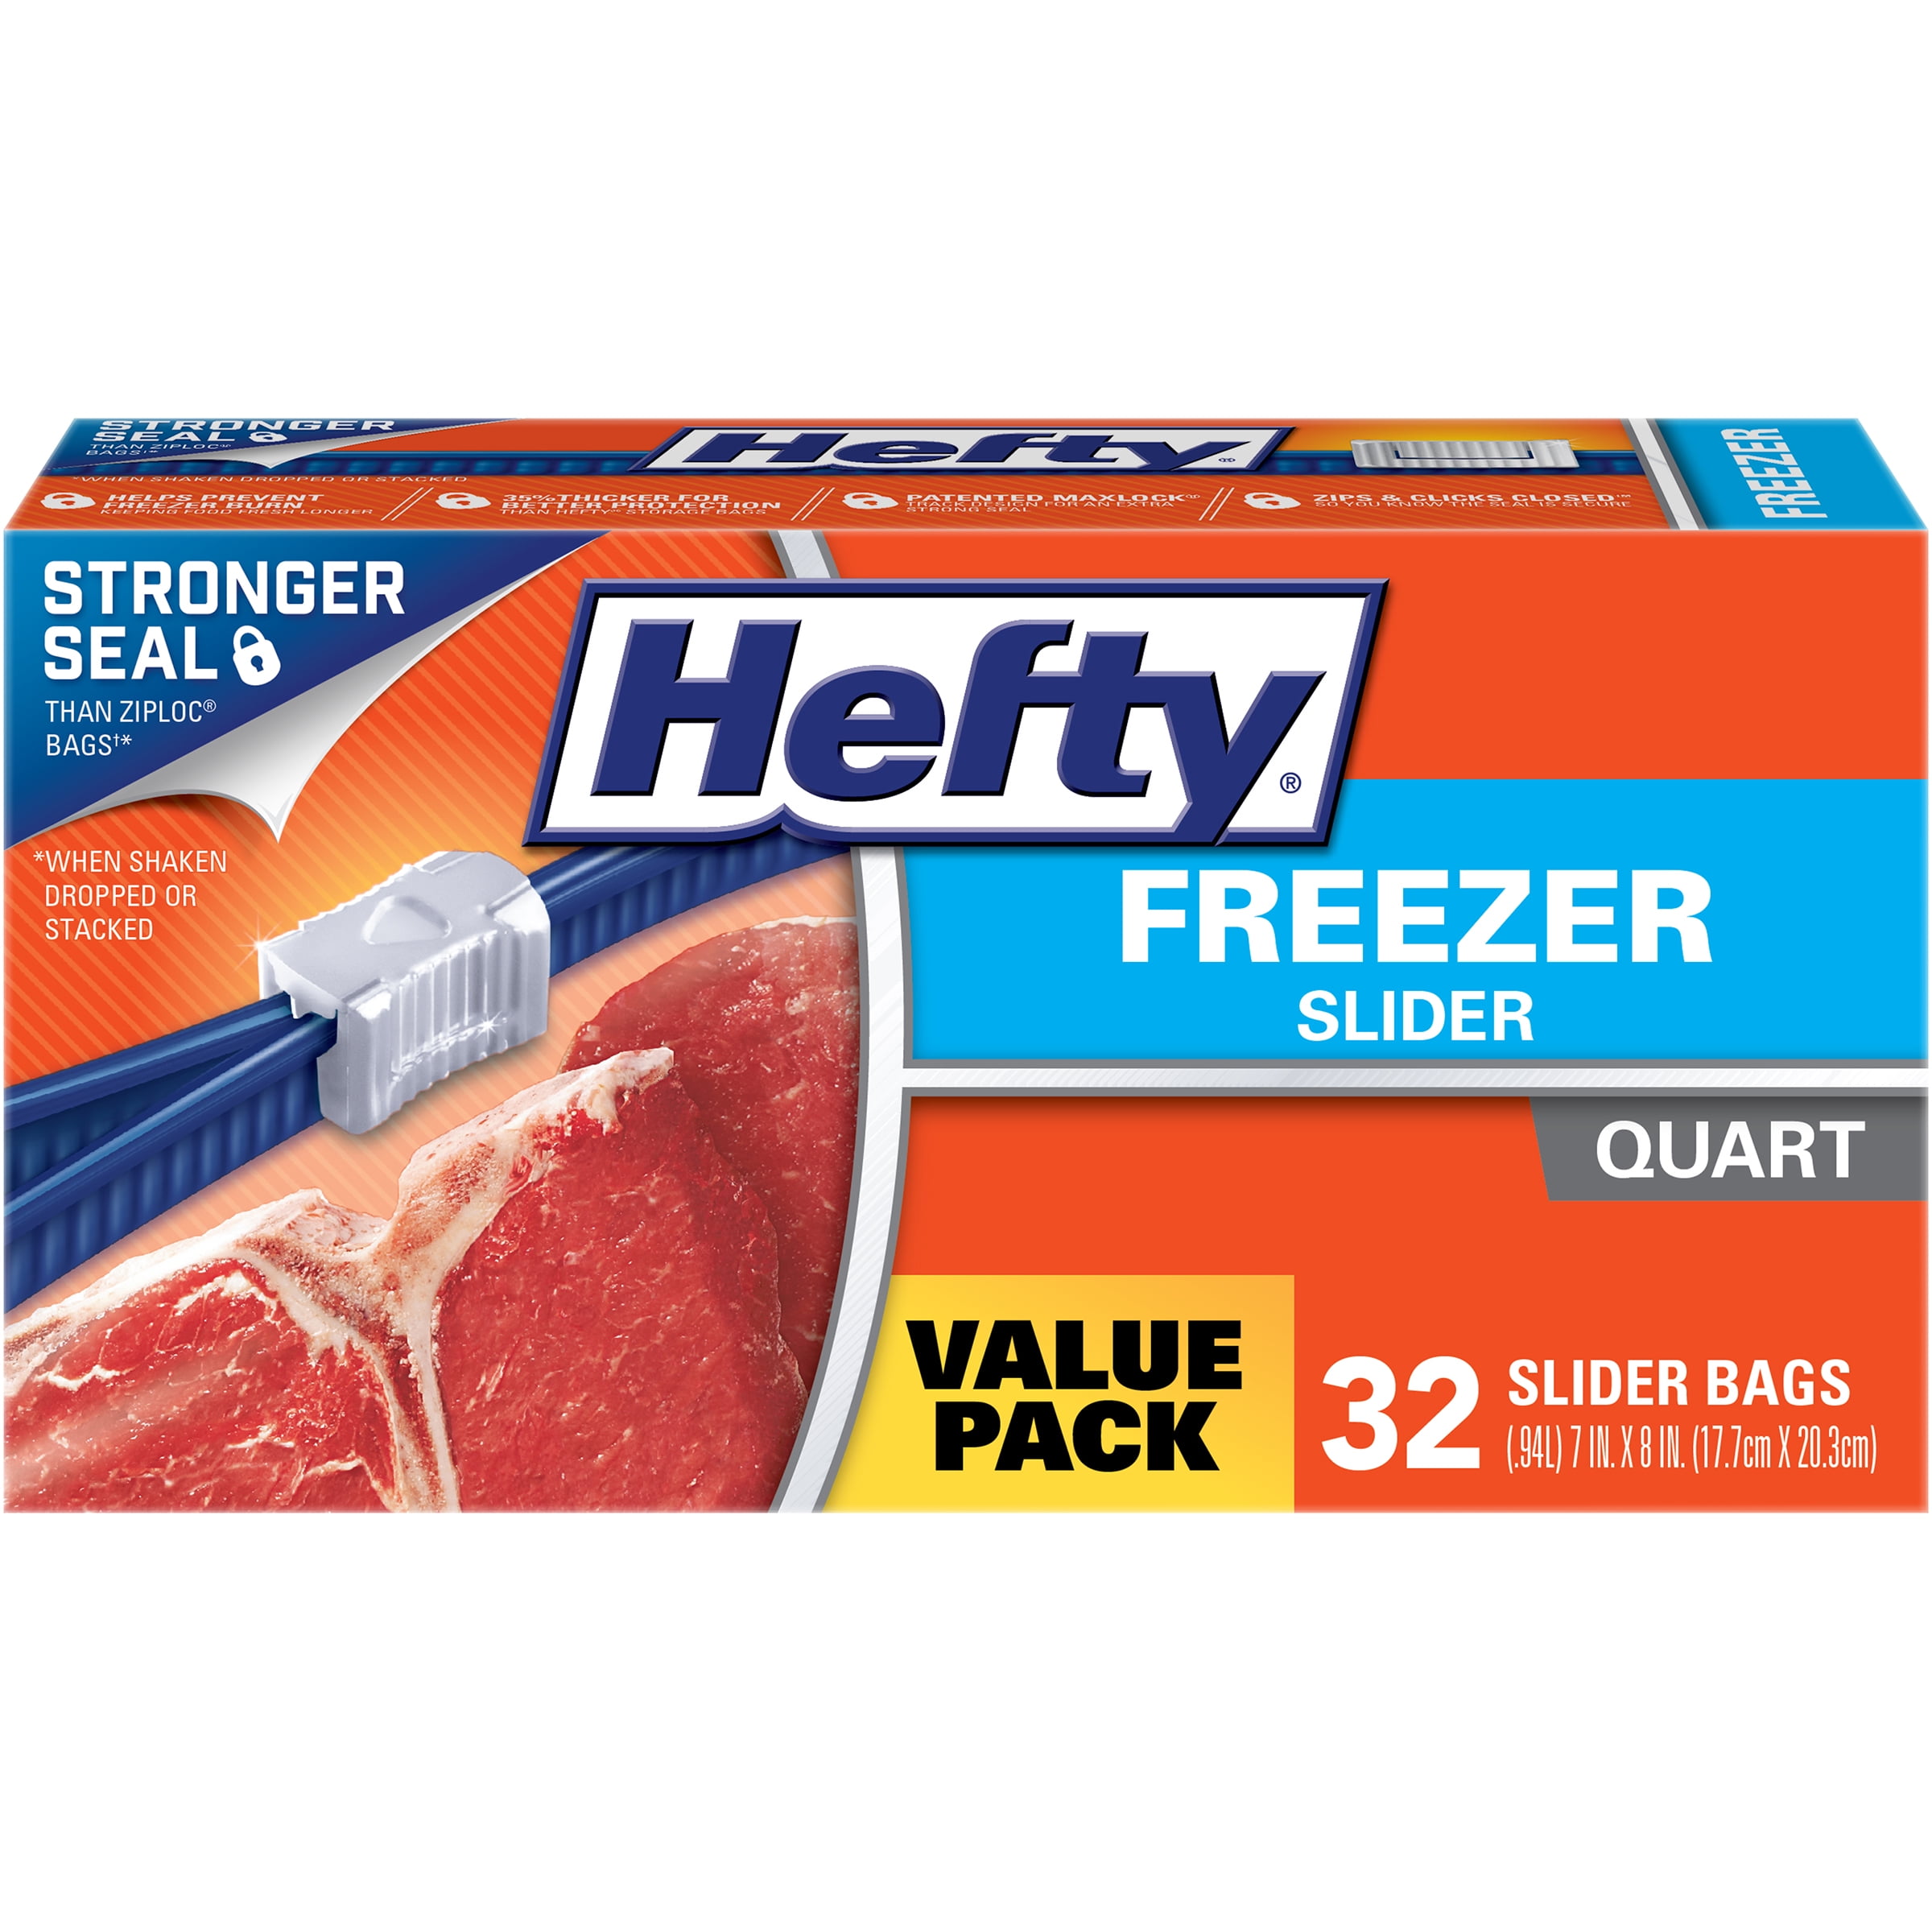 Hefty Slider Quart Size Freezer Bags Value Pack, 35 count